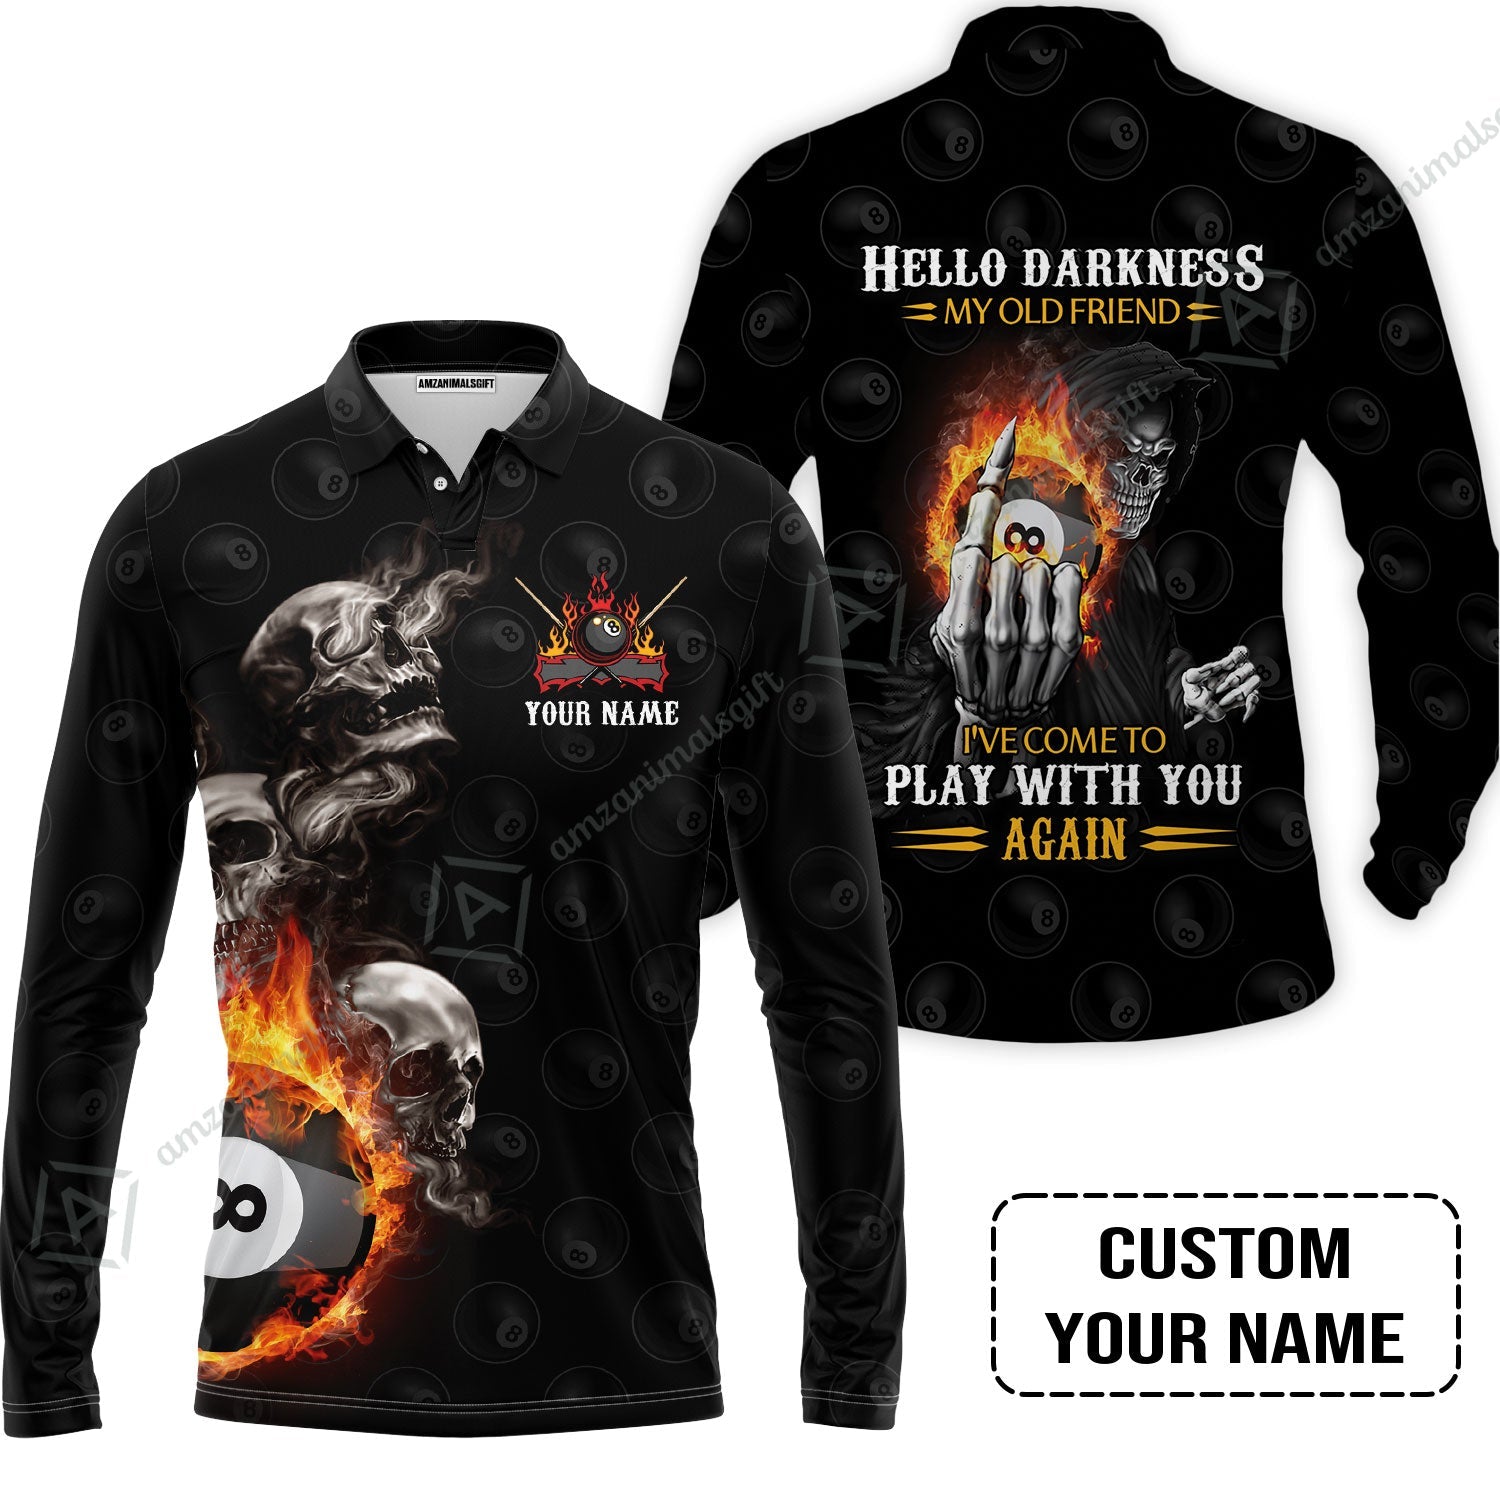 Custom Name Billiard Long Polo Shirt, Personalized Skull Reaper 8 Ball Pool Billiards, Hello Darkness My Old Friend Long Polo Shirt